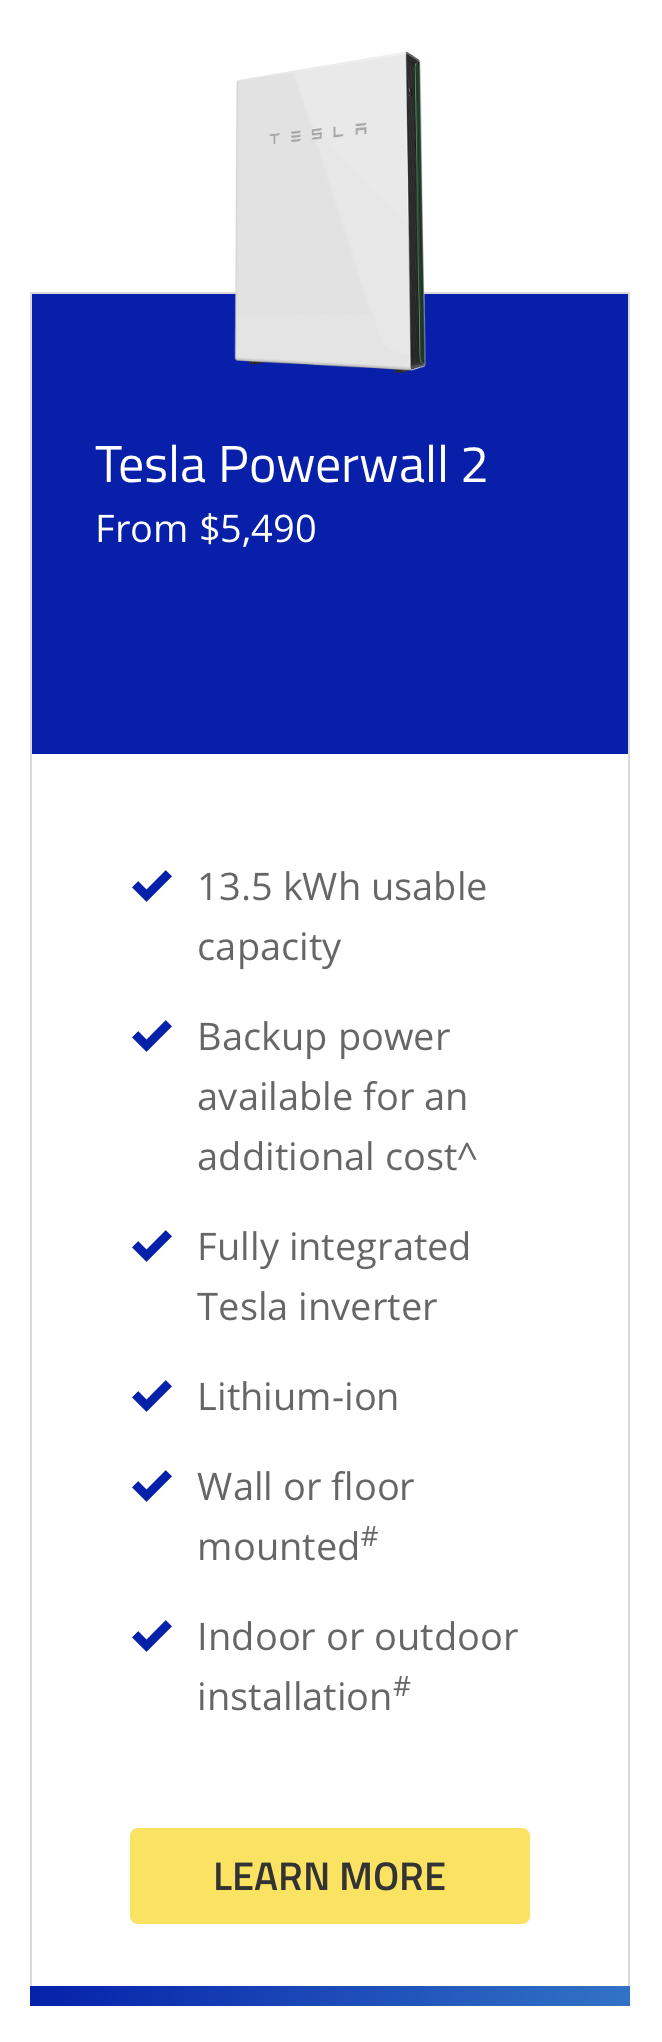 Tesla Powerwall Rebate Austin Energy Solar Rebate Program 2020 